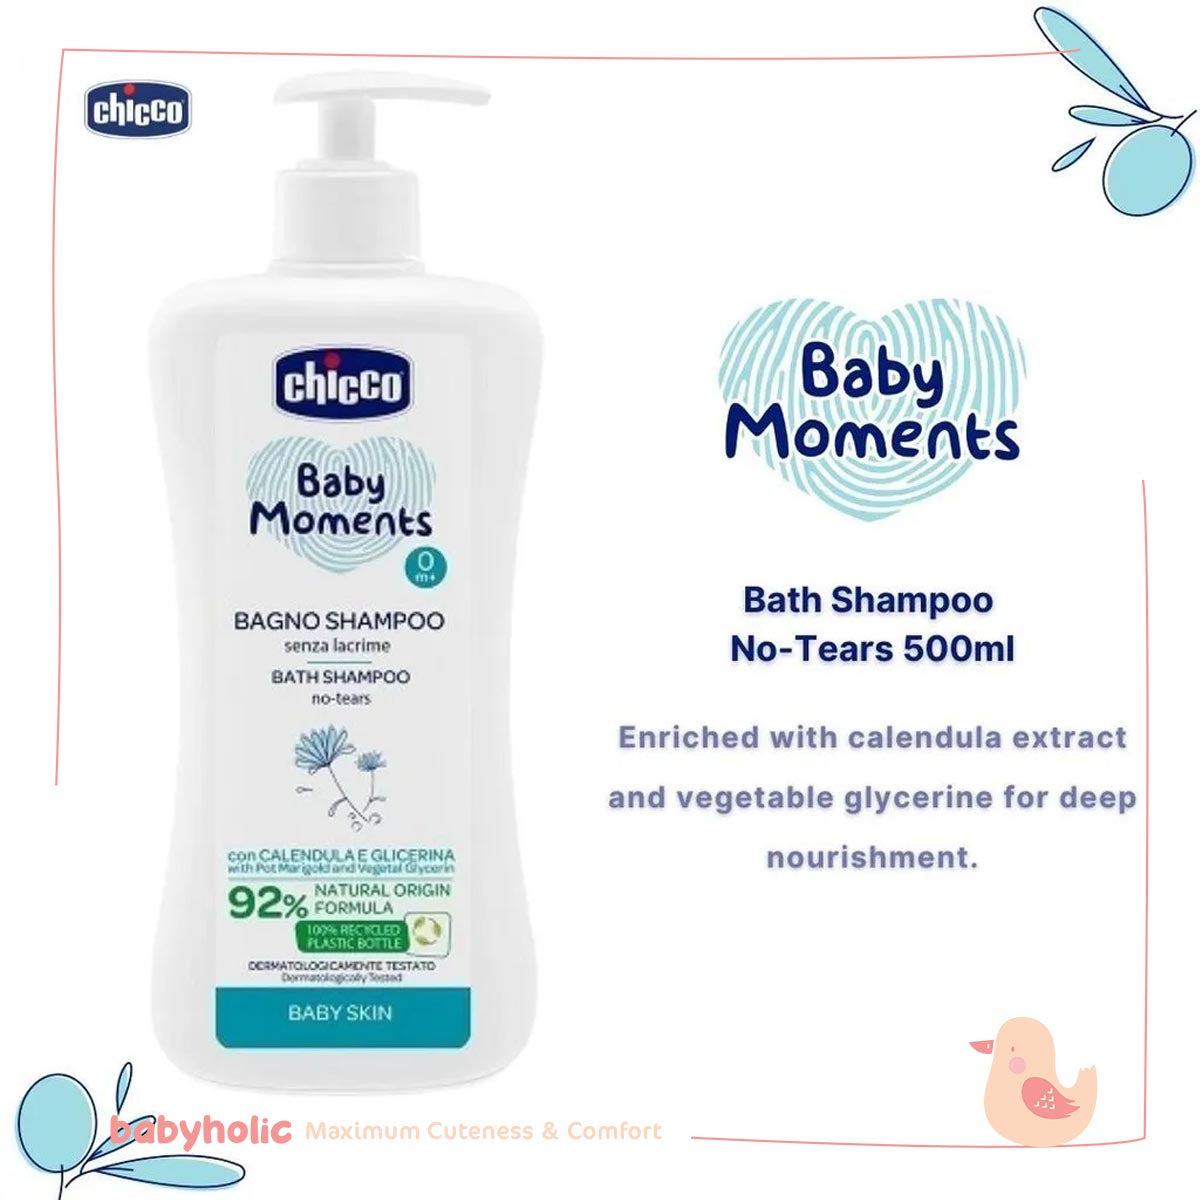 Chicco Baby shampoo bath